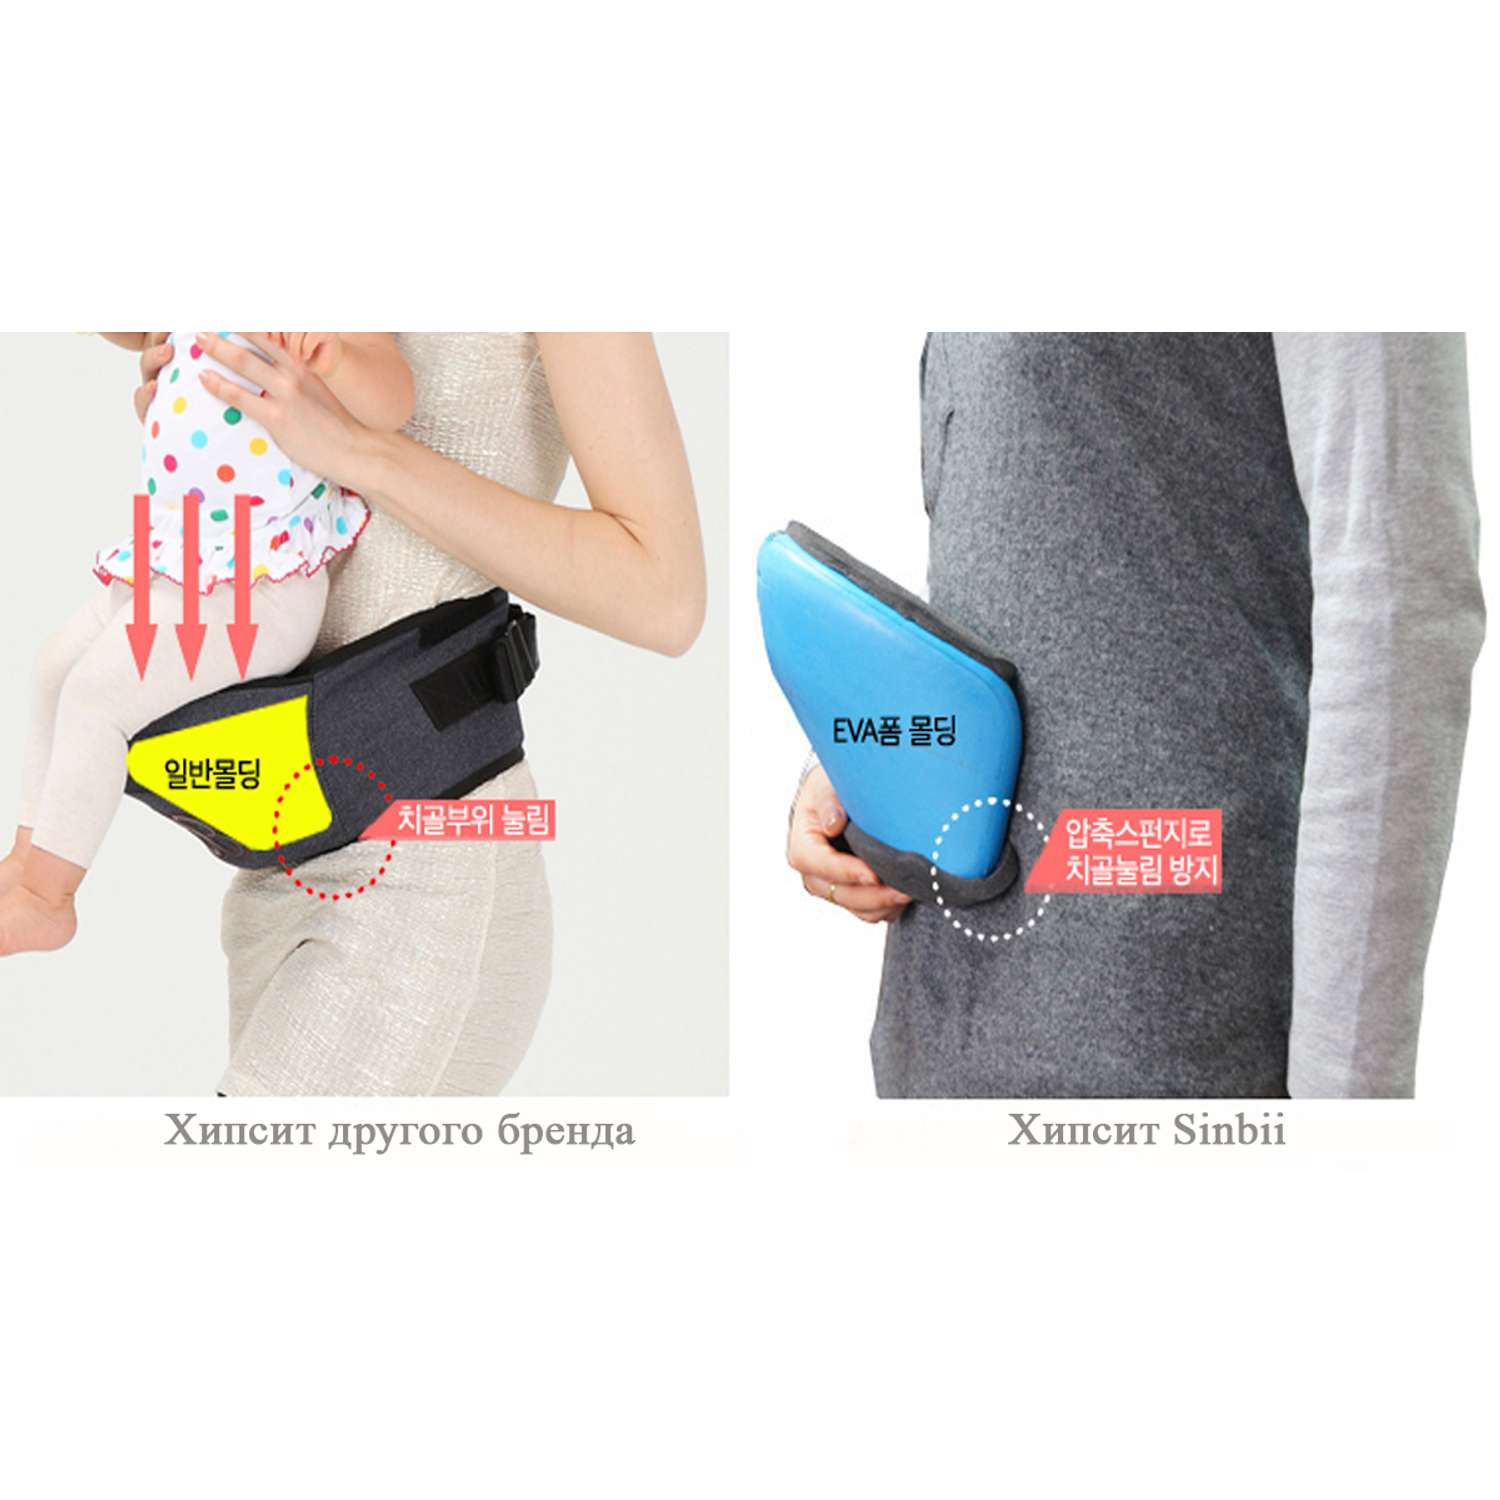 Хипсит Premium S-Pocket Set Sinbii на 2 лямках синий - фото 9